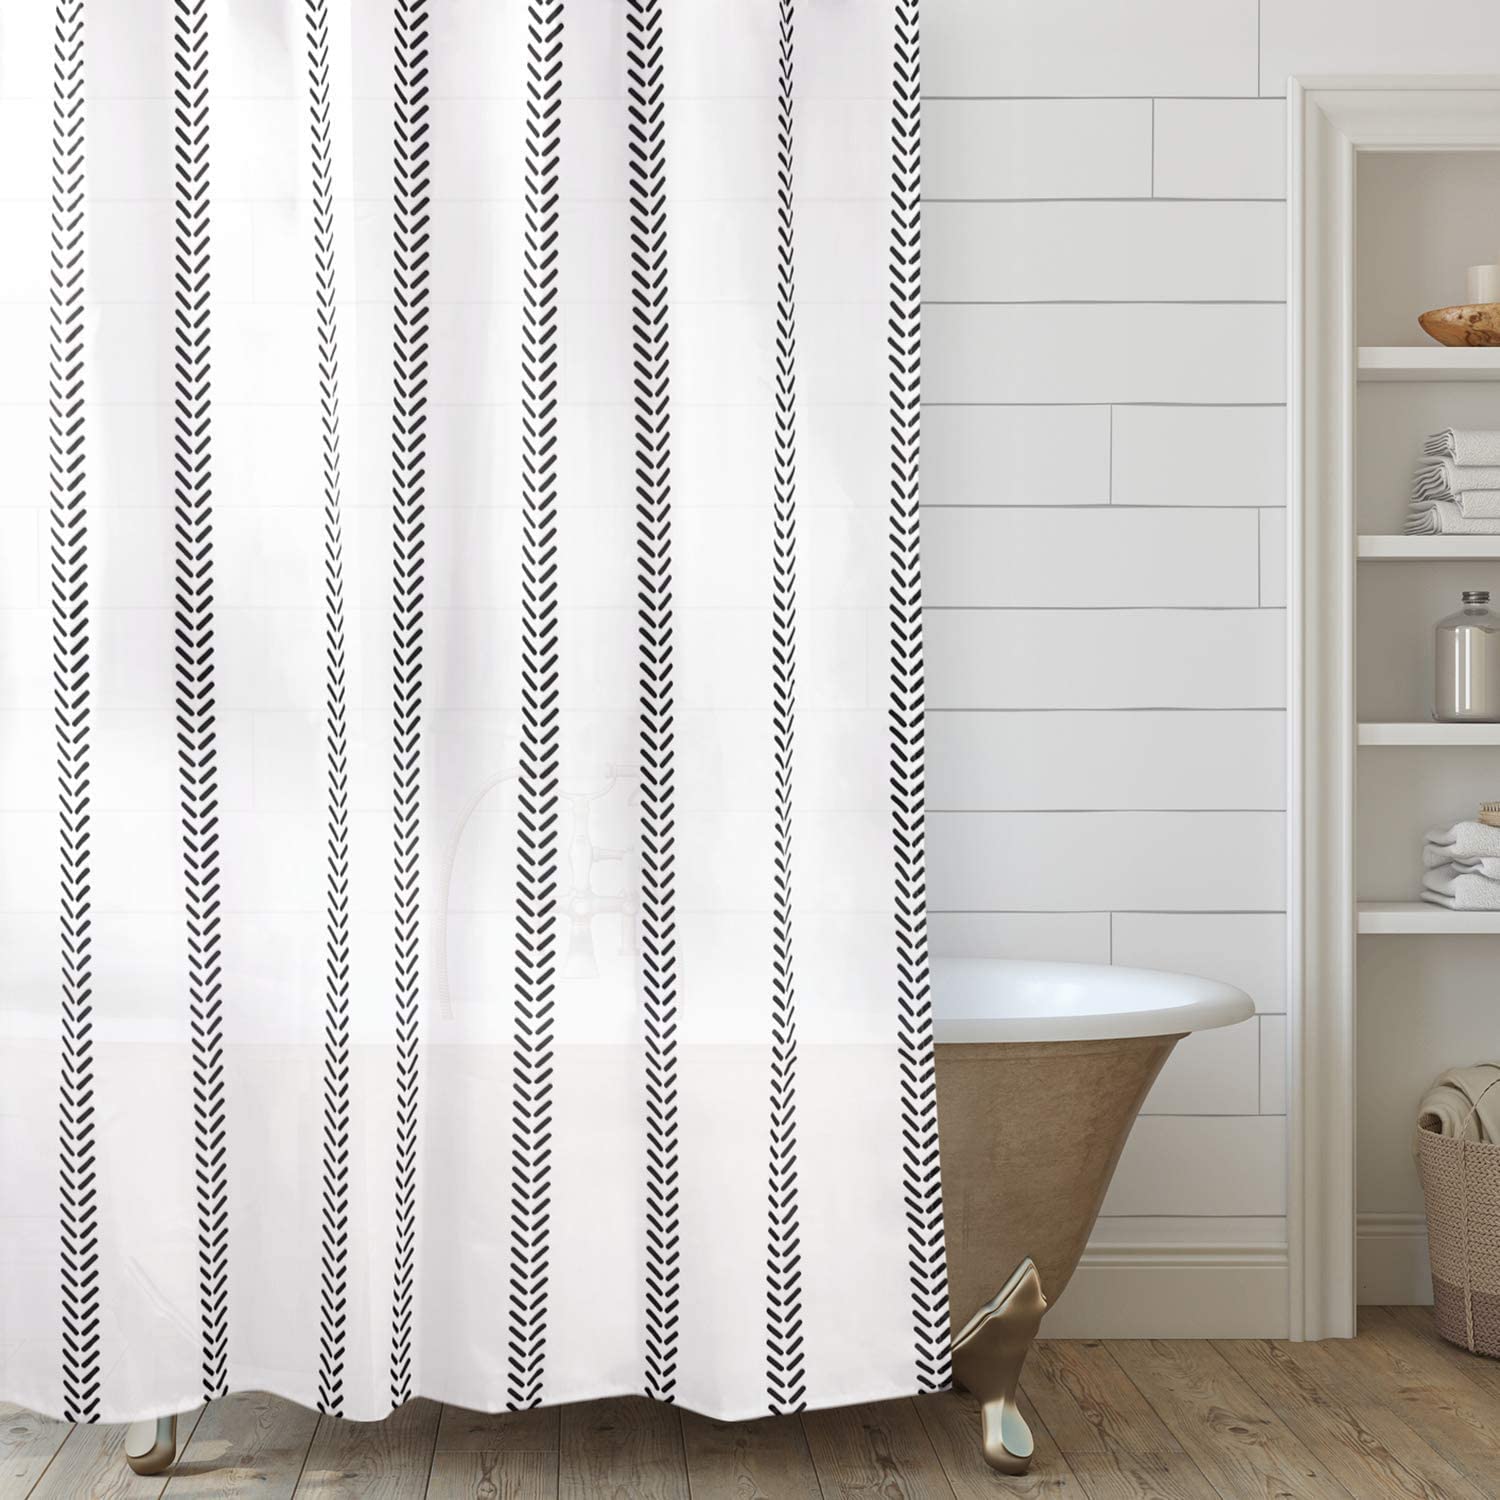 Shower Curtain Set with 12 Metal Hooks, Boho Arrow Modern Design